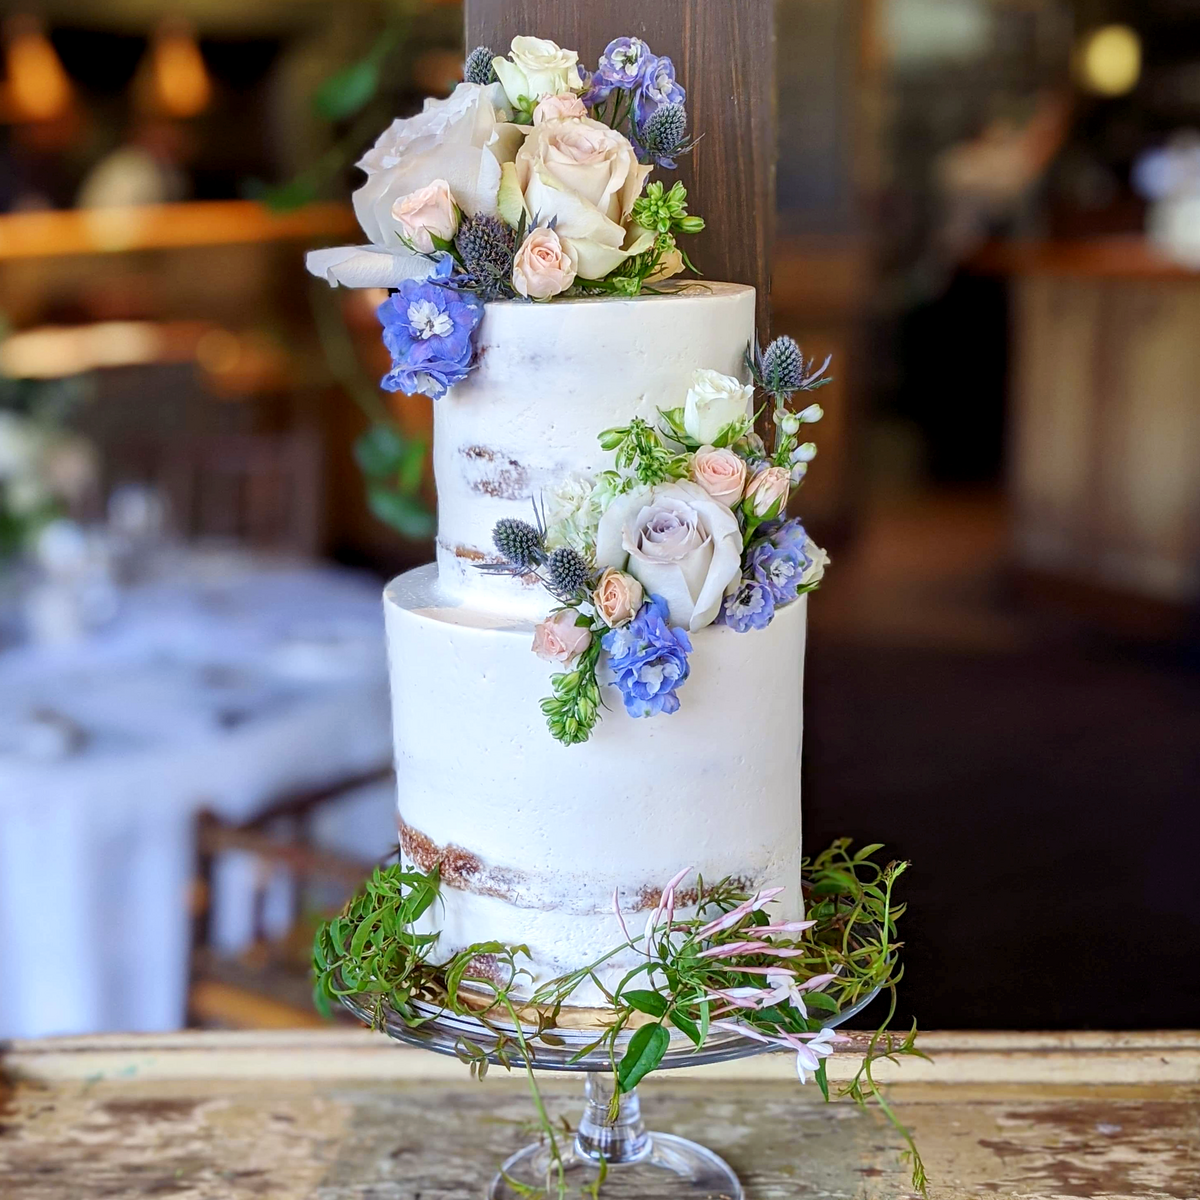 Whippt Kitchen - wedding cake Oct 2020 2